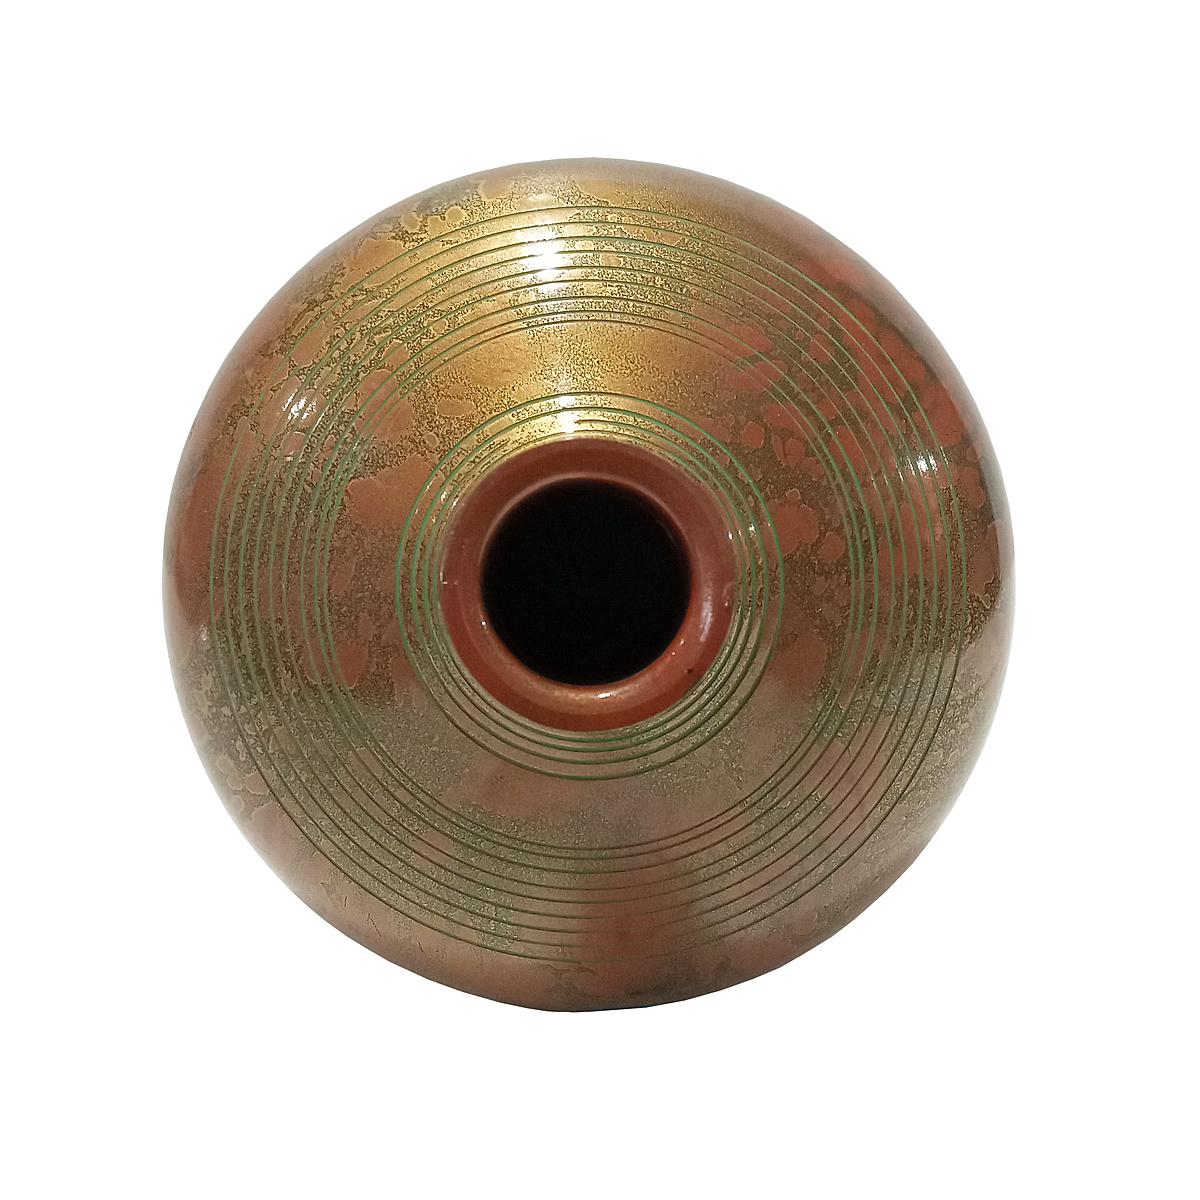 Hand-Crafted Japanese Brass Ikebana Vase, Early 20th Century